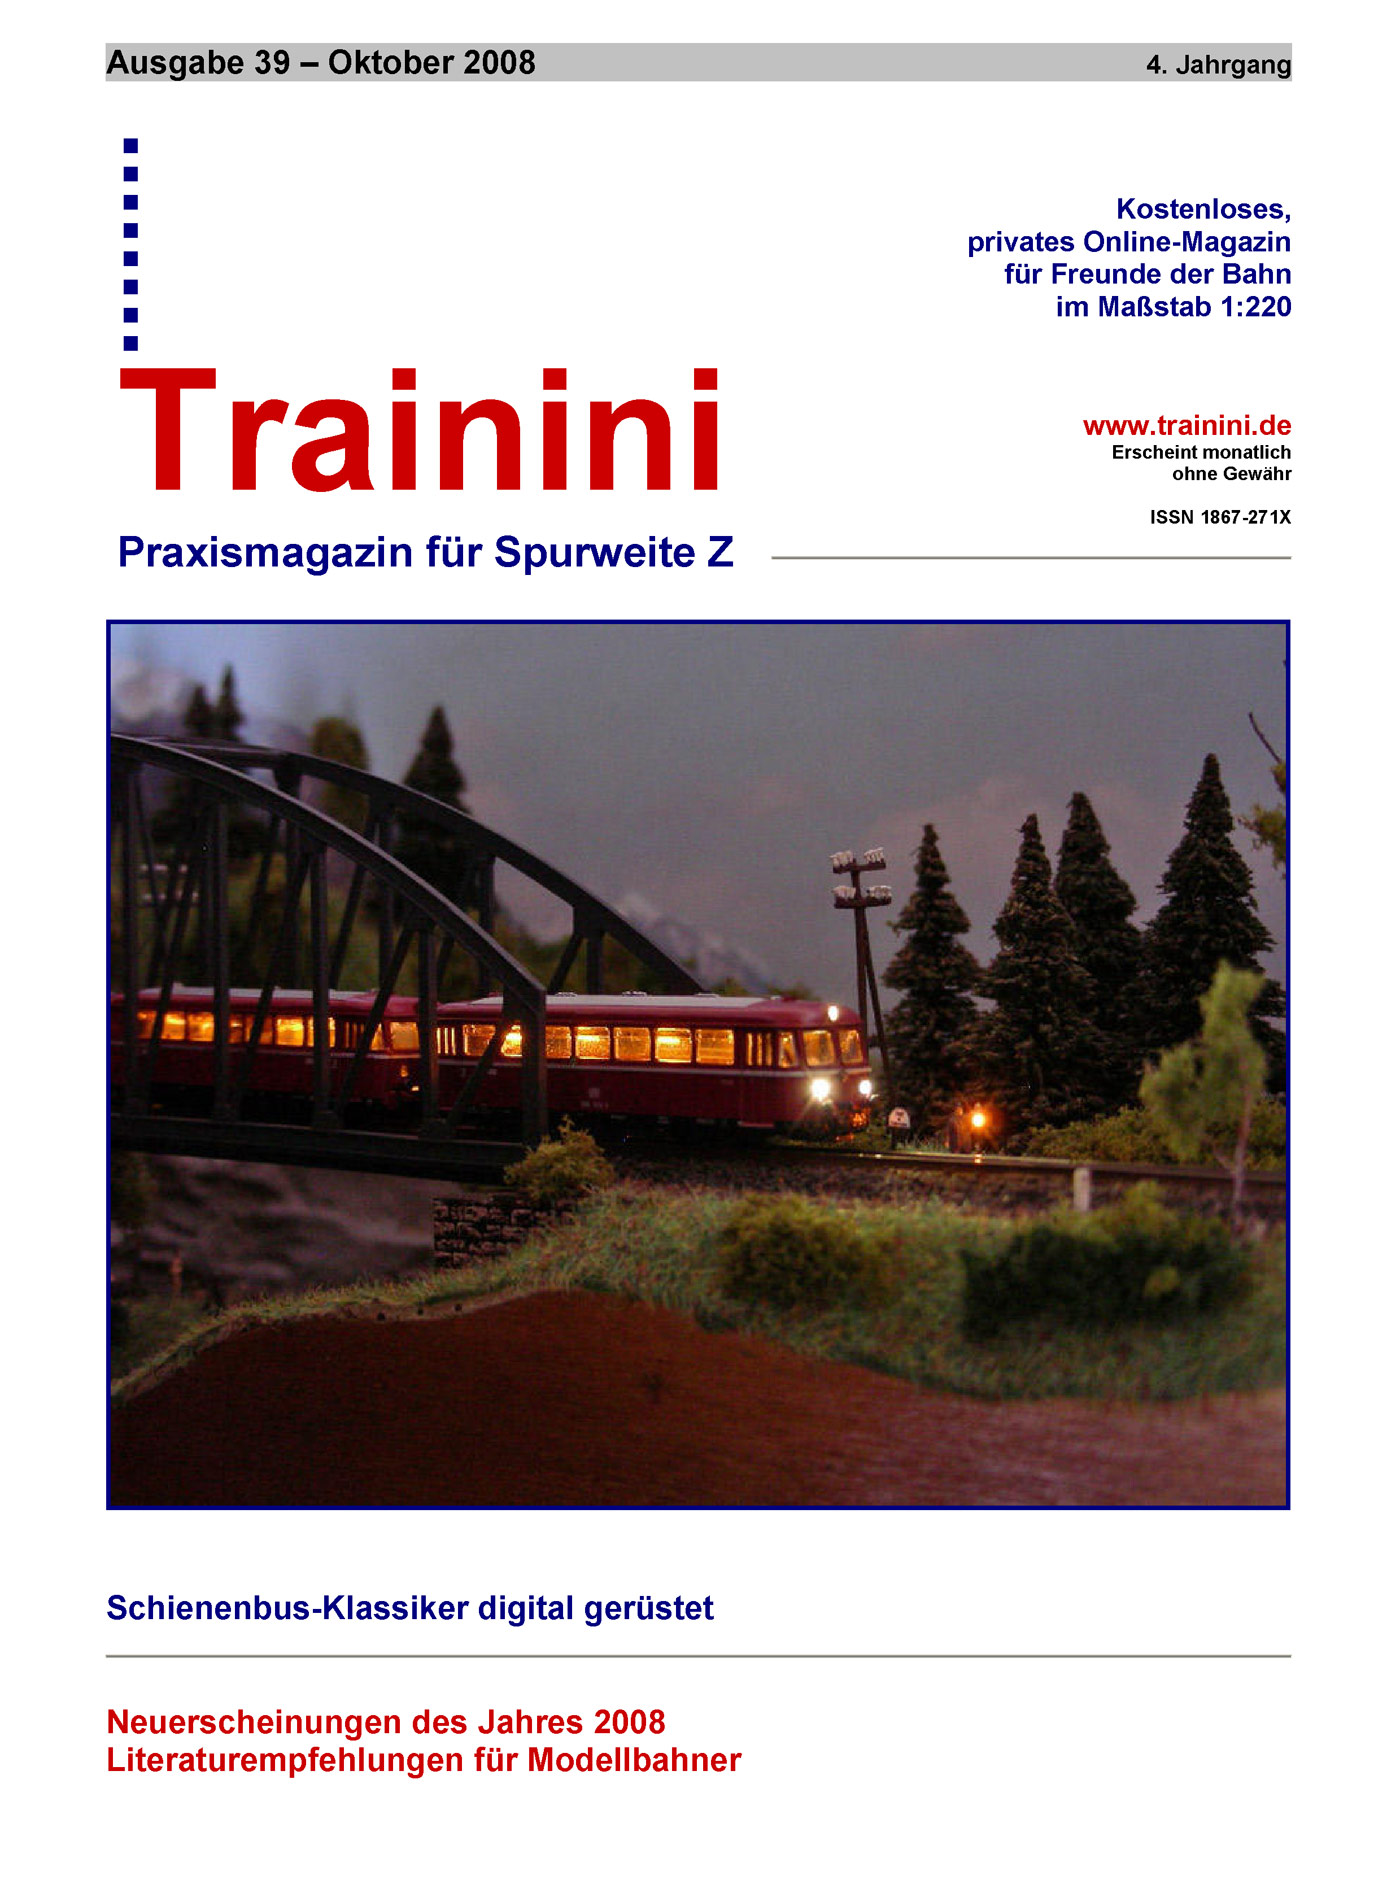 Trainini Ausgabe Oktober 2008